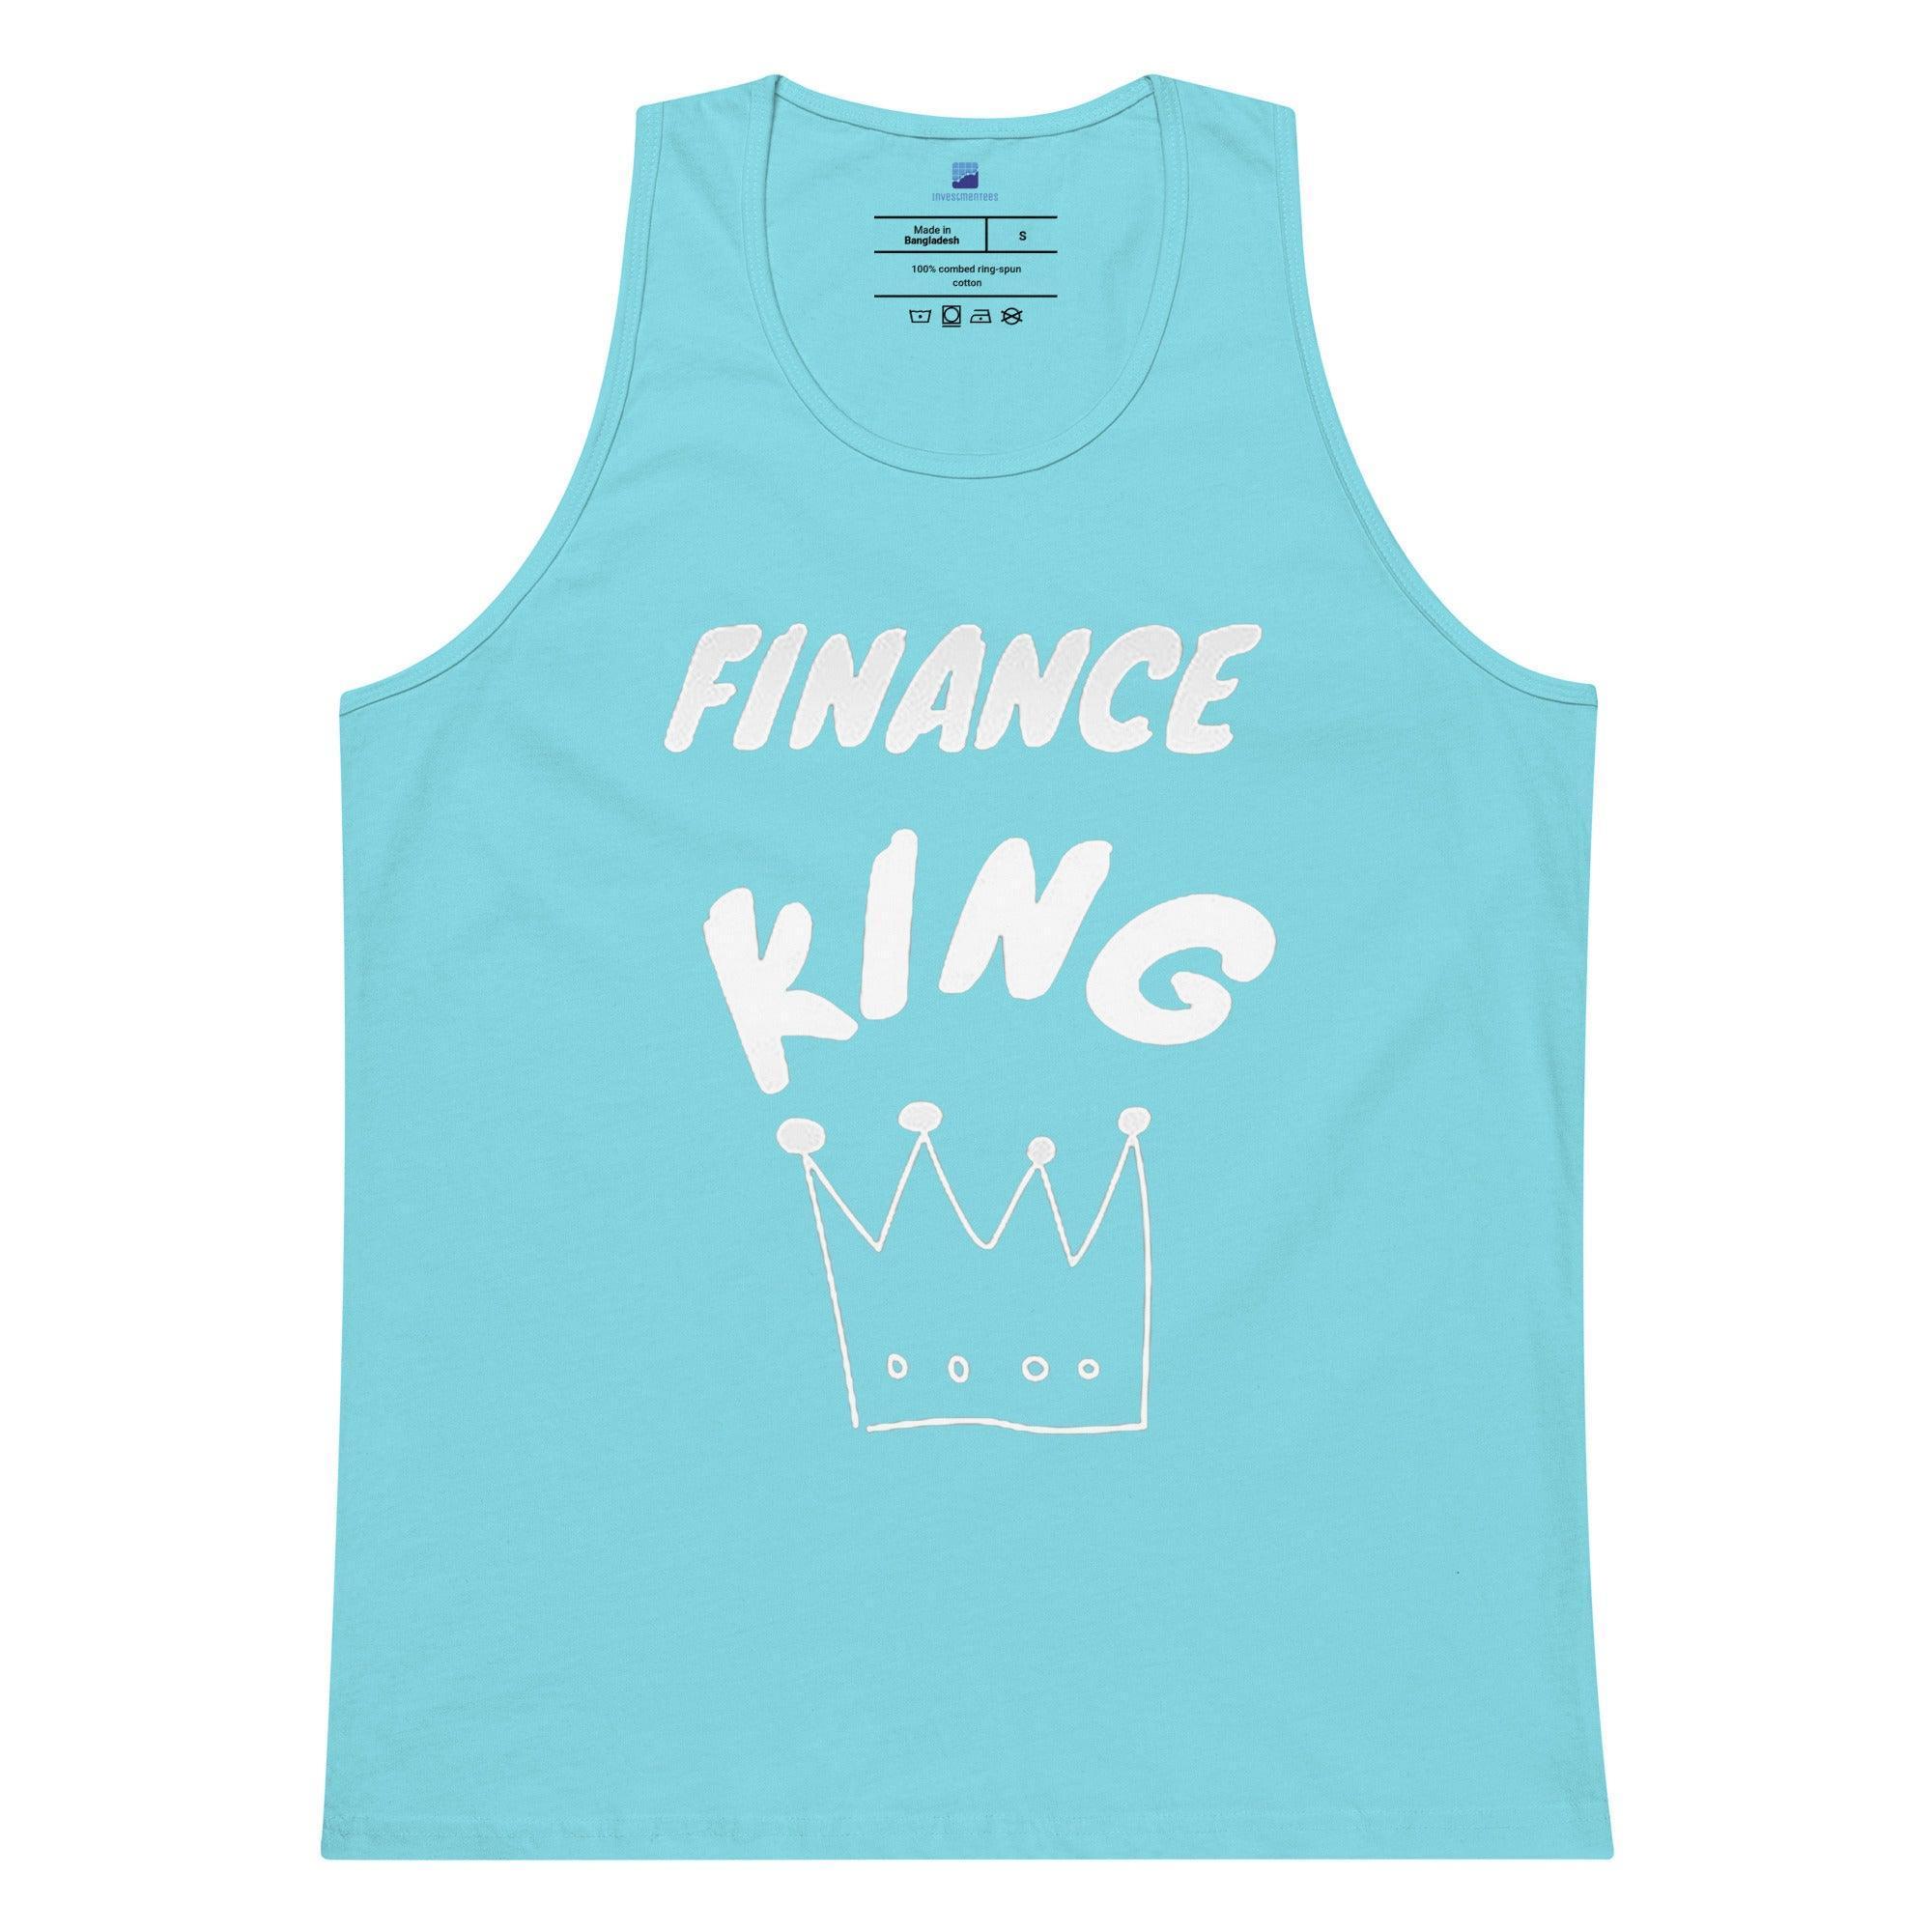 Finance King Tank Top - InvestmenTees